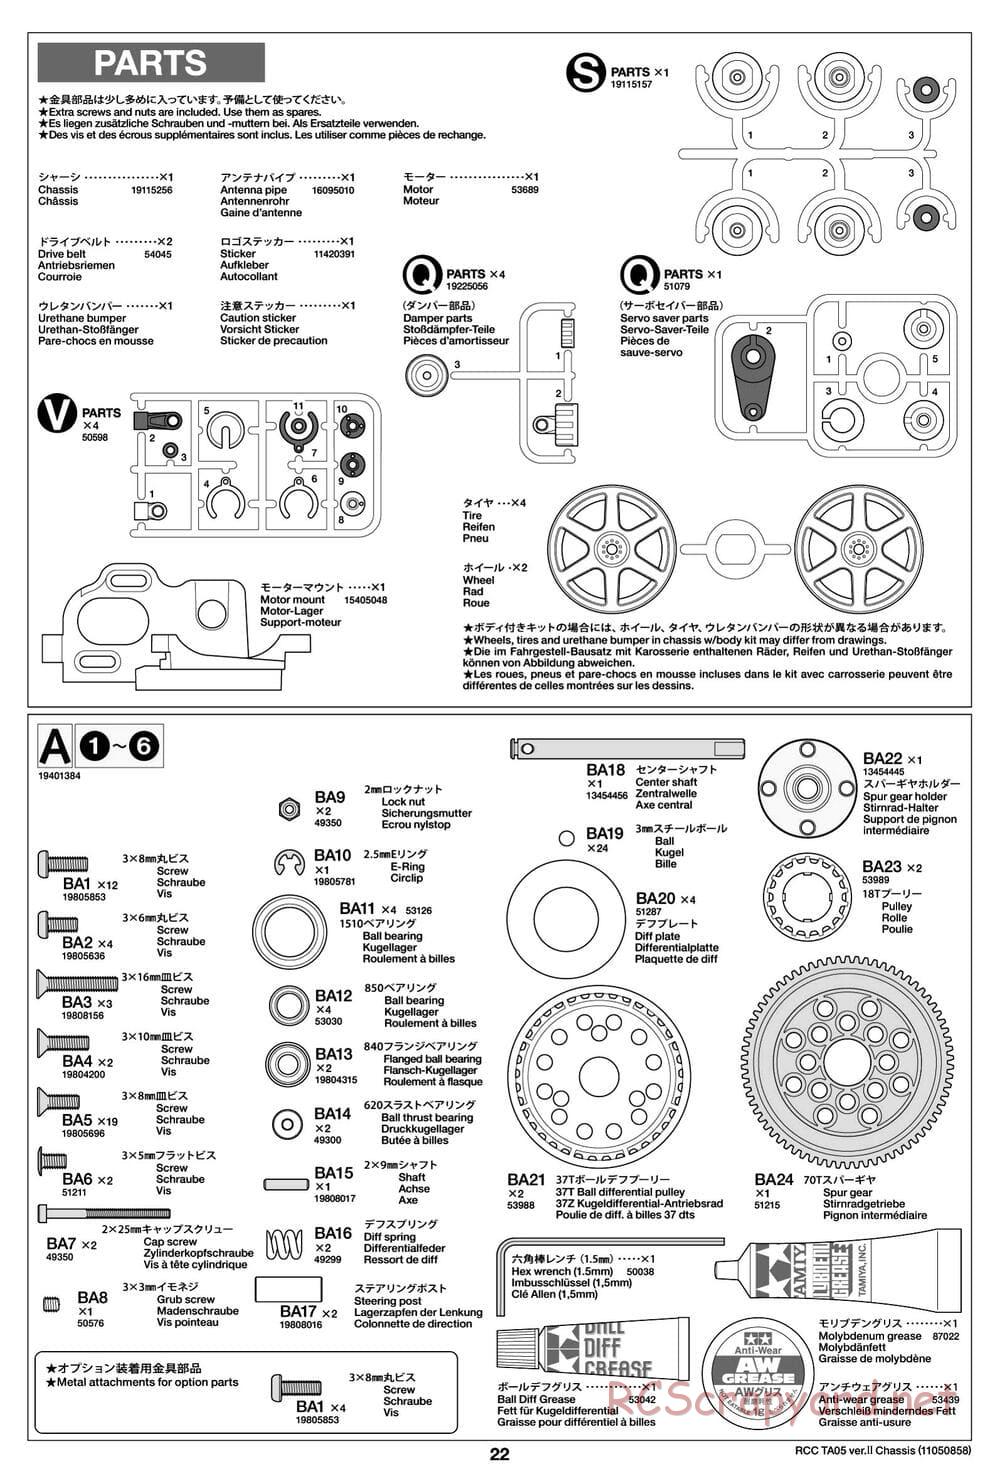 Tamiya - TA05 Ver.II Chassis - Manual - Page 22